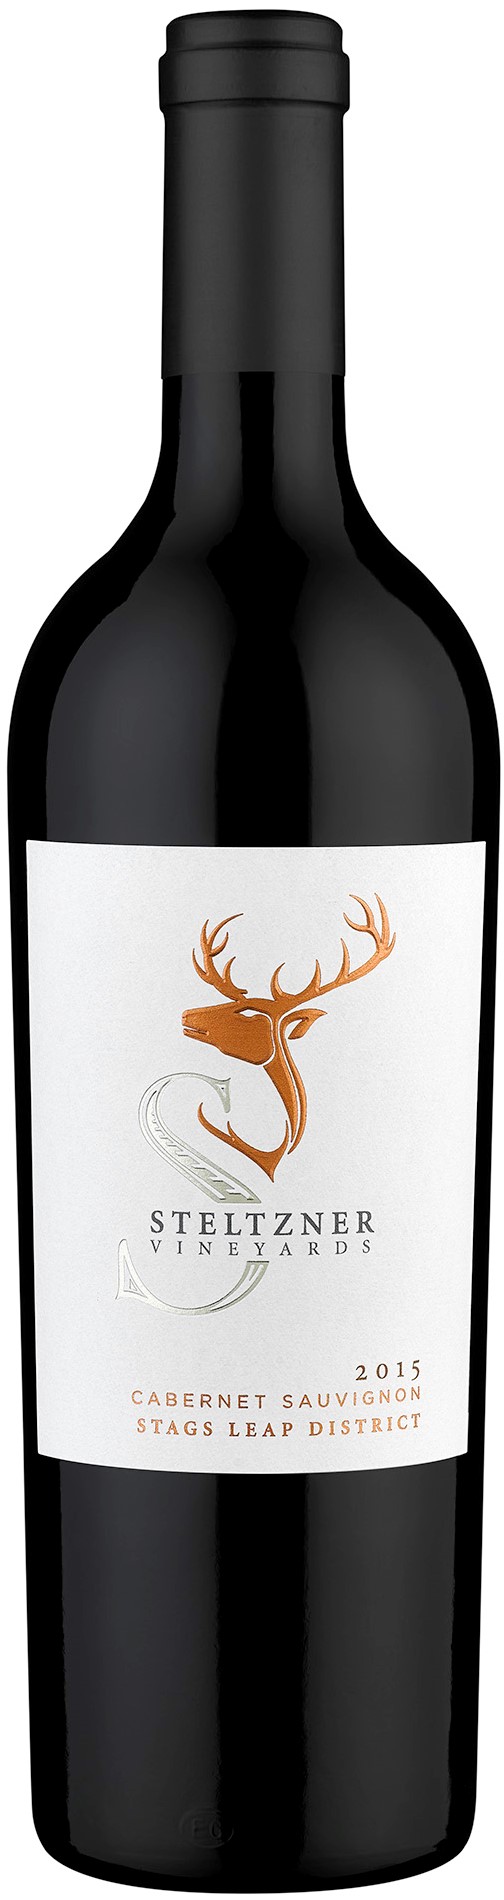 Product Image for 2015 Steltzner Vineyards Cabernet Sauvignon, SLD